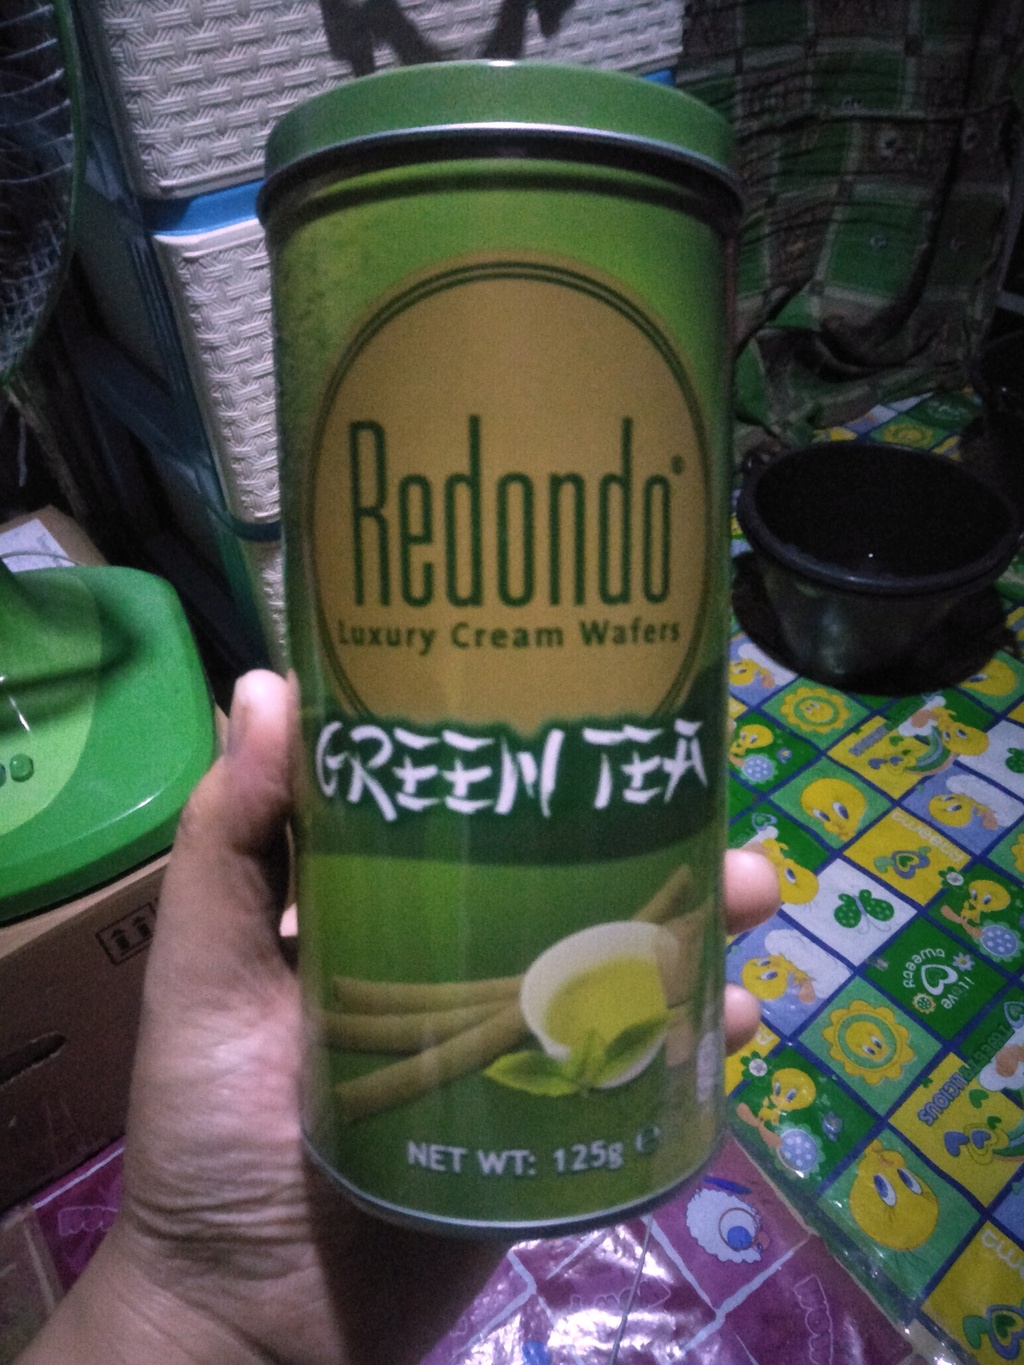 Redondo Luxury Cream Wafers Green Tea รีดอนโด้ ชาเขียว กรีนที เว รีวิว